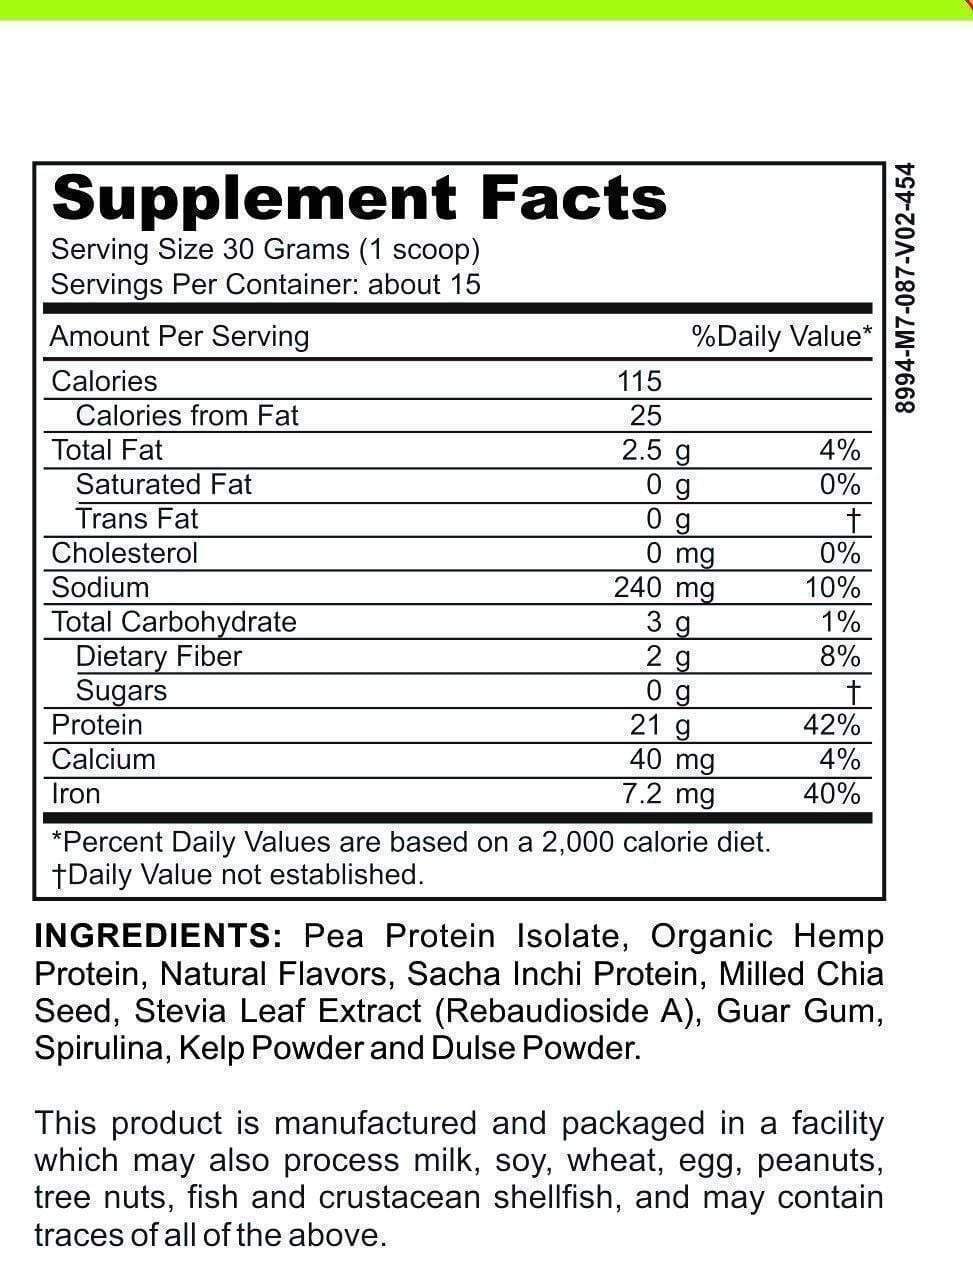 Low FODMAP Certified Protein Powder Vegan, Gluten Free, Dairy Free, Soy Free, Grain Free, Sugar Free, All Natural, Non GMO, Low Carb - casa de sante